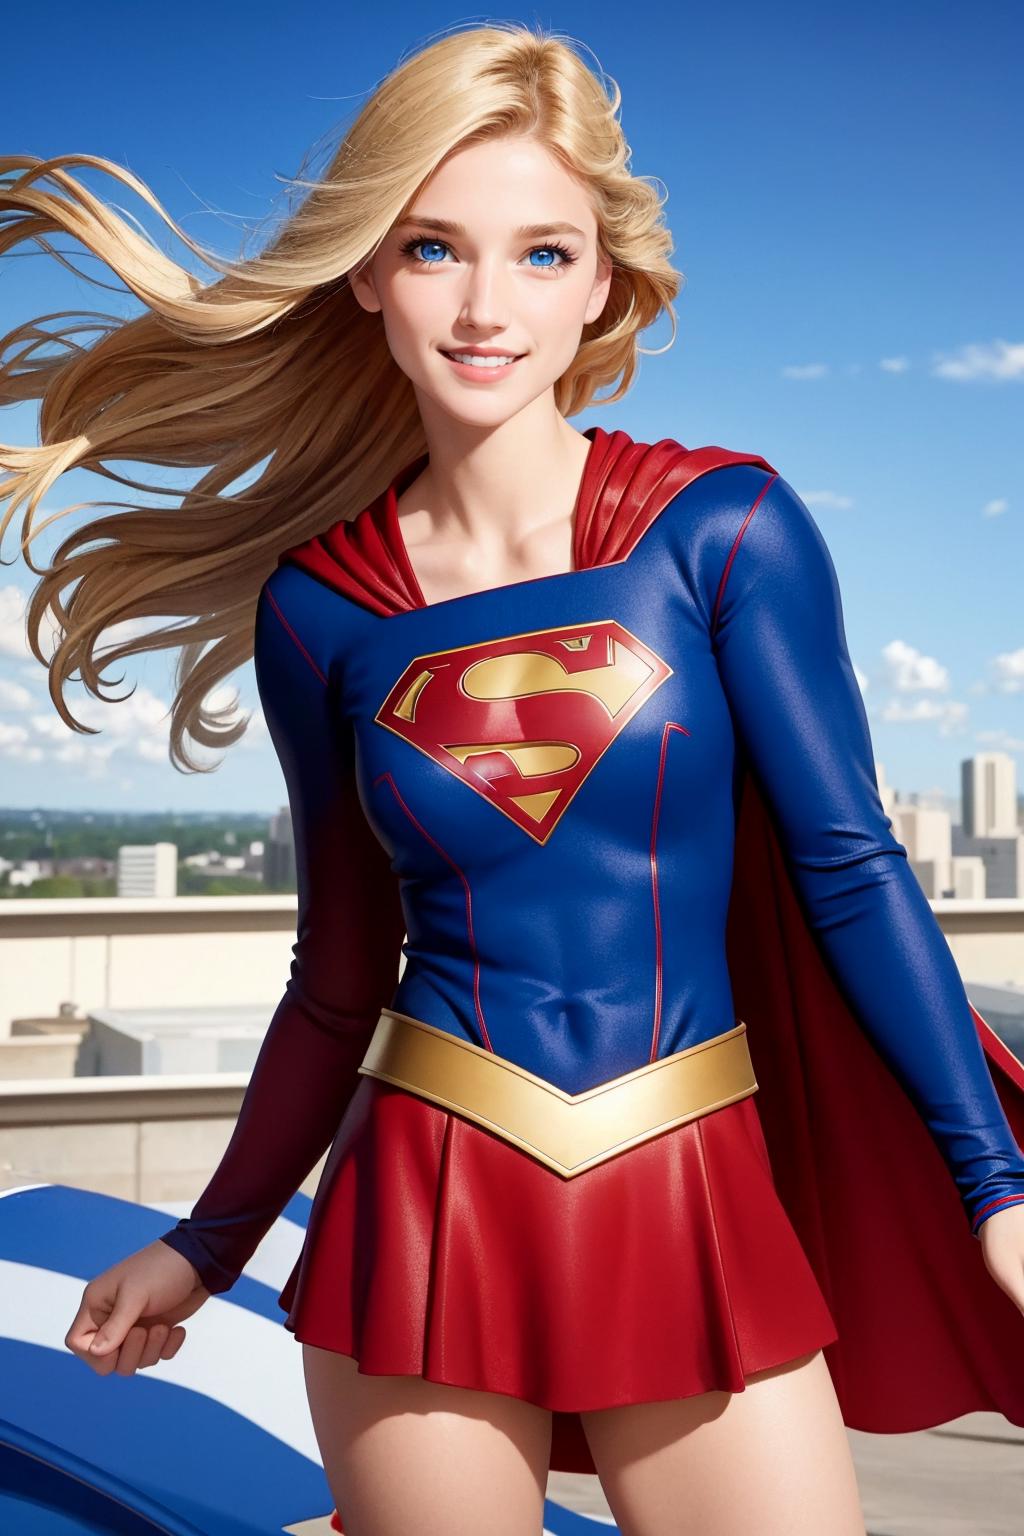 Supergirl (DC Comic) image by gaberoch_y